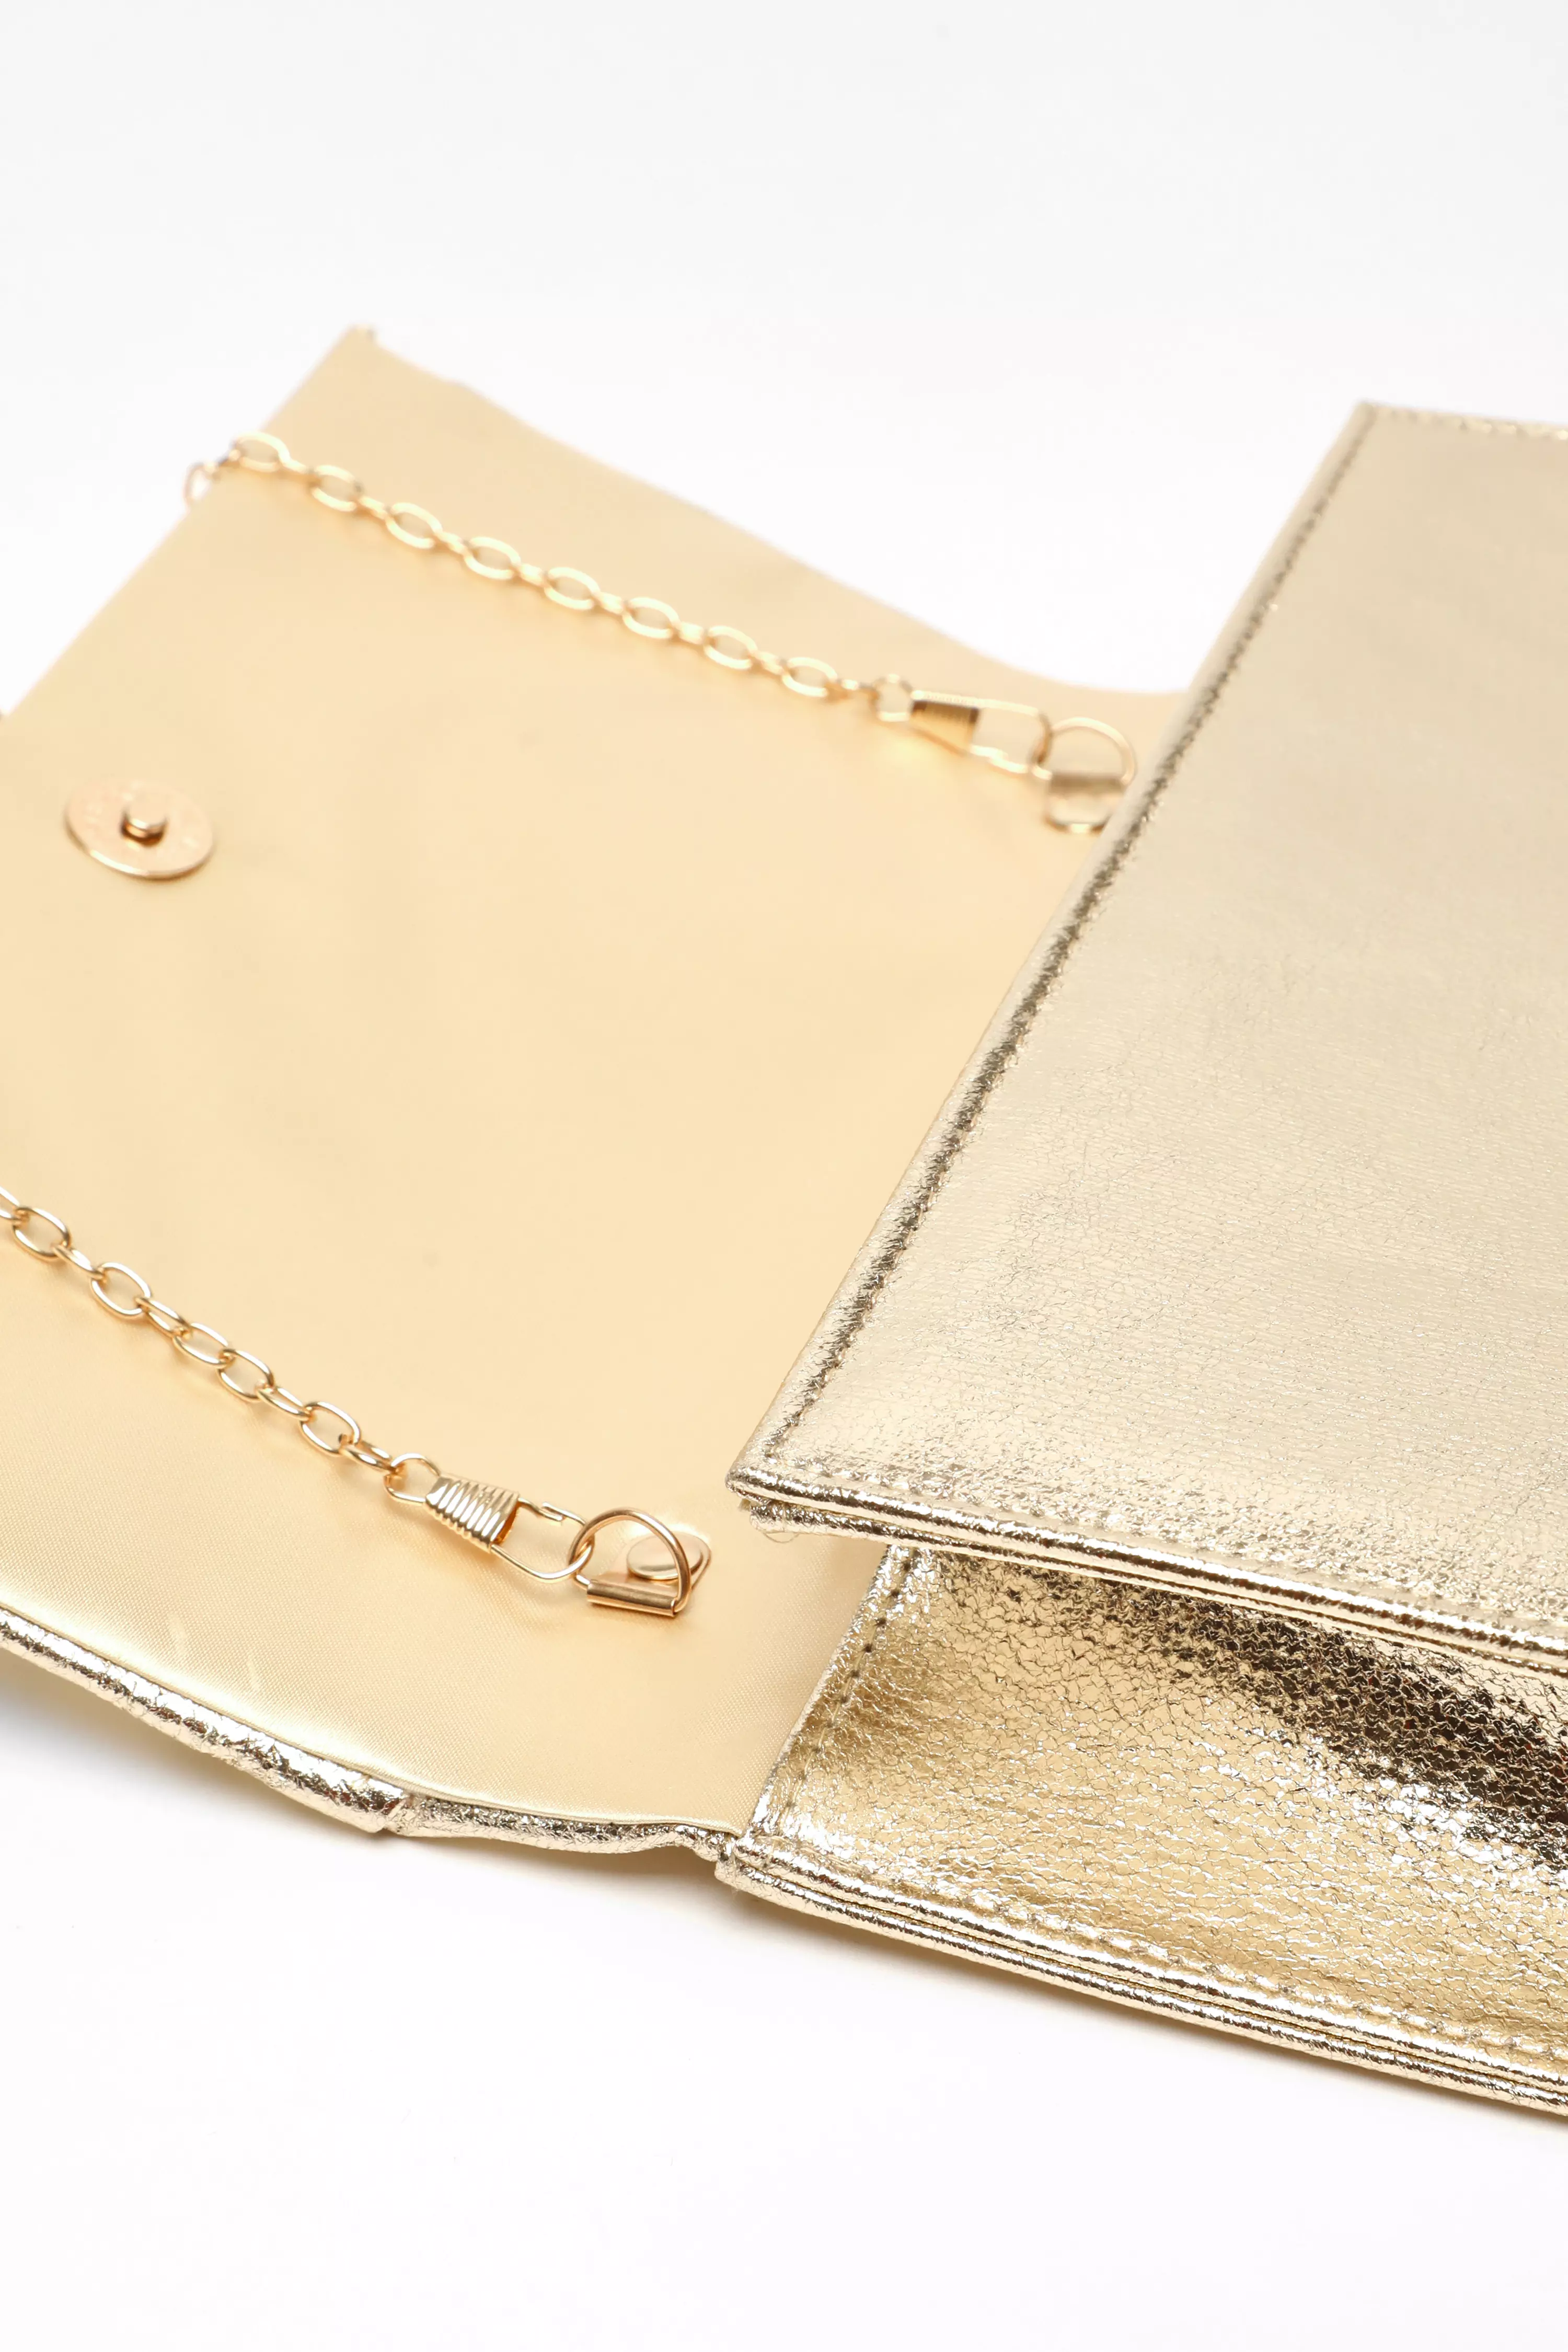 Gold Foil Twist Clutch Bag